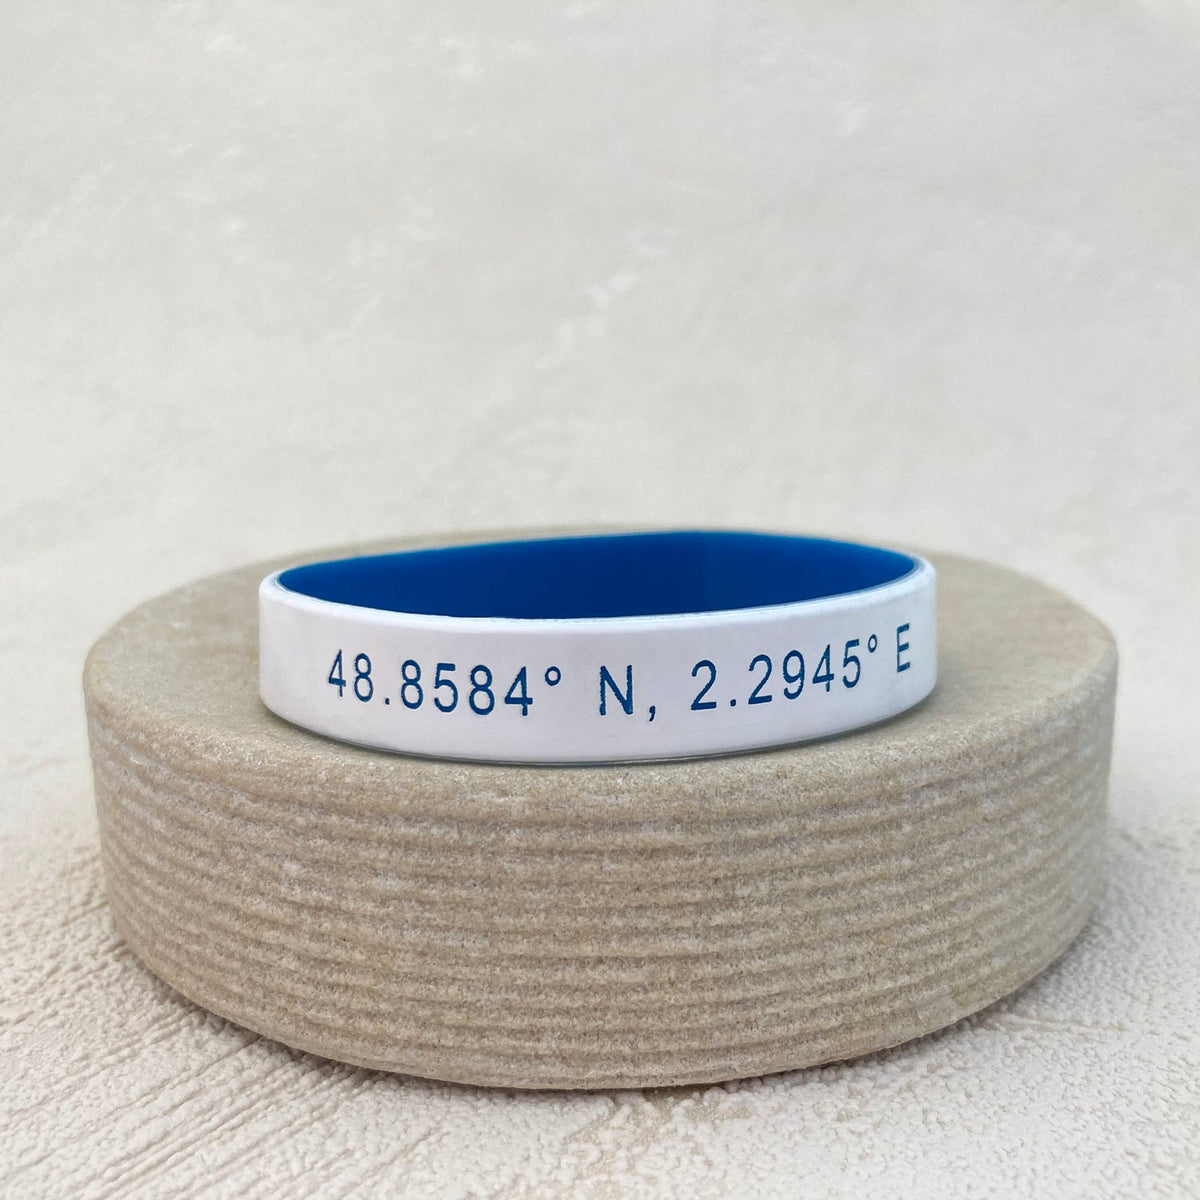 grid coordinates personalised wristband white blue